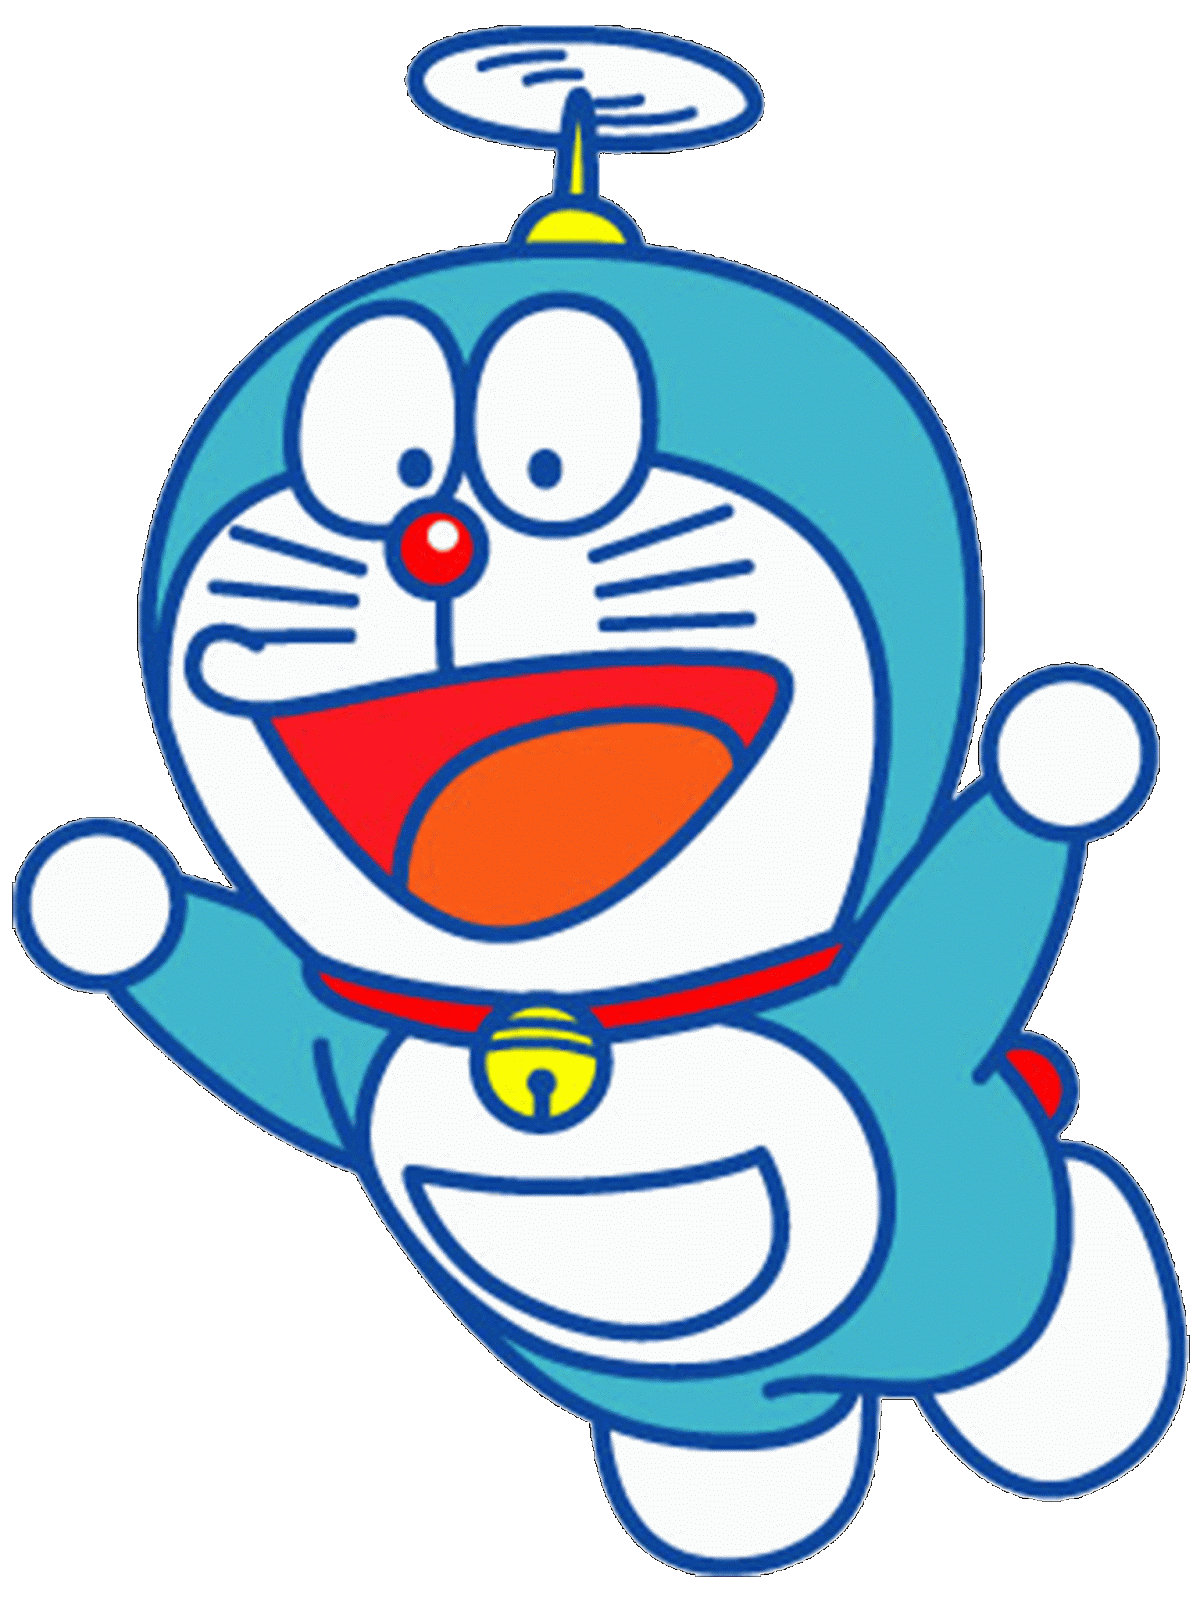 Doraemon Games Cannon Cartoon World Inilah Gambar Emoticon Toko Fd